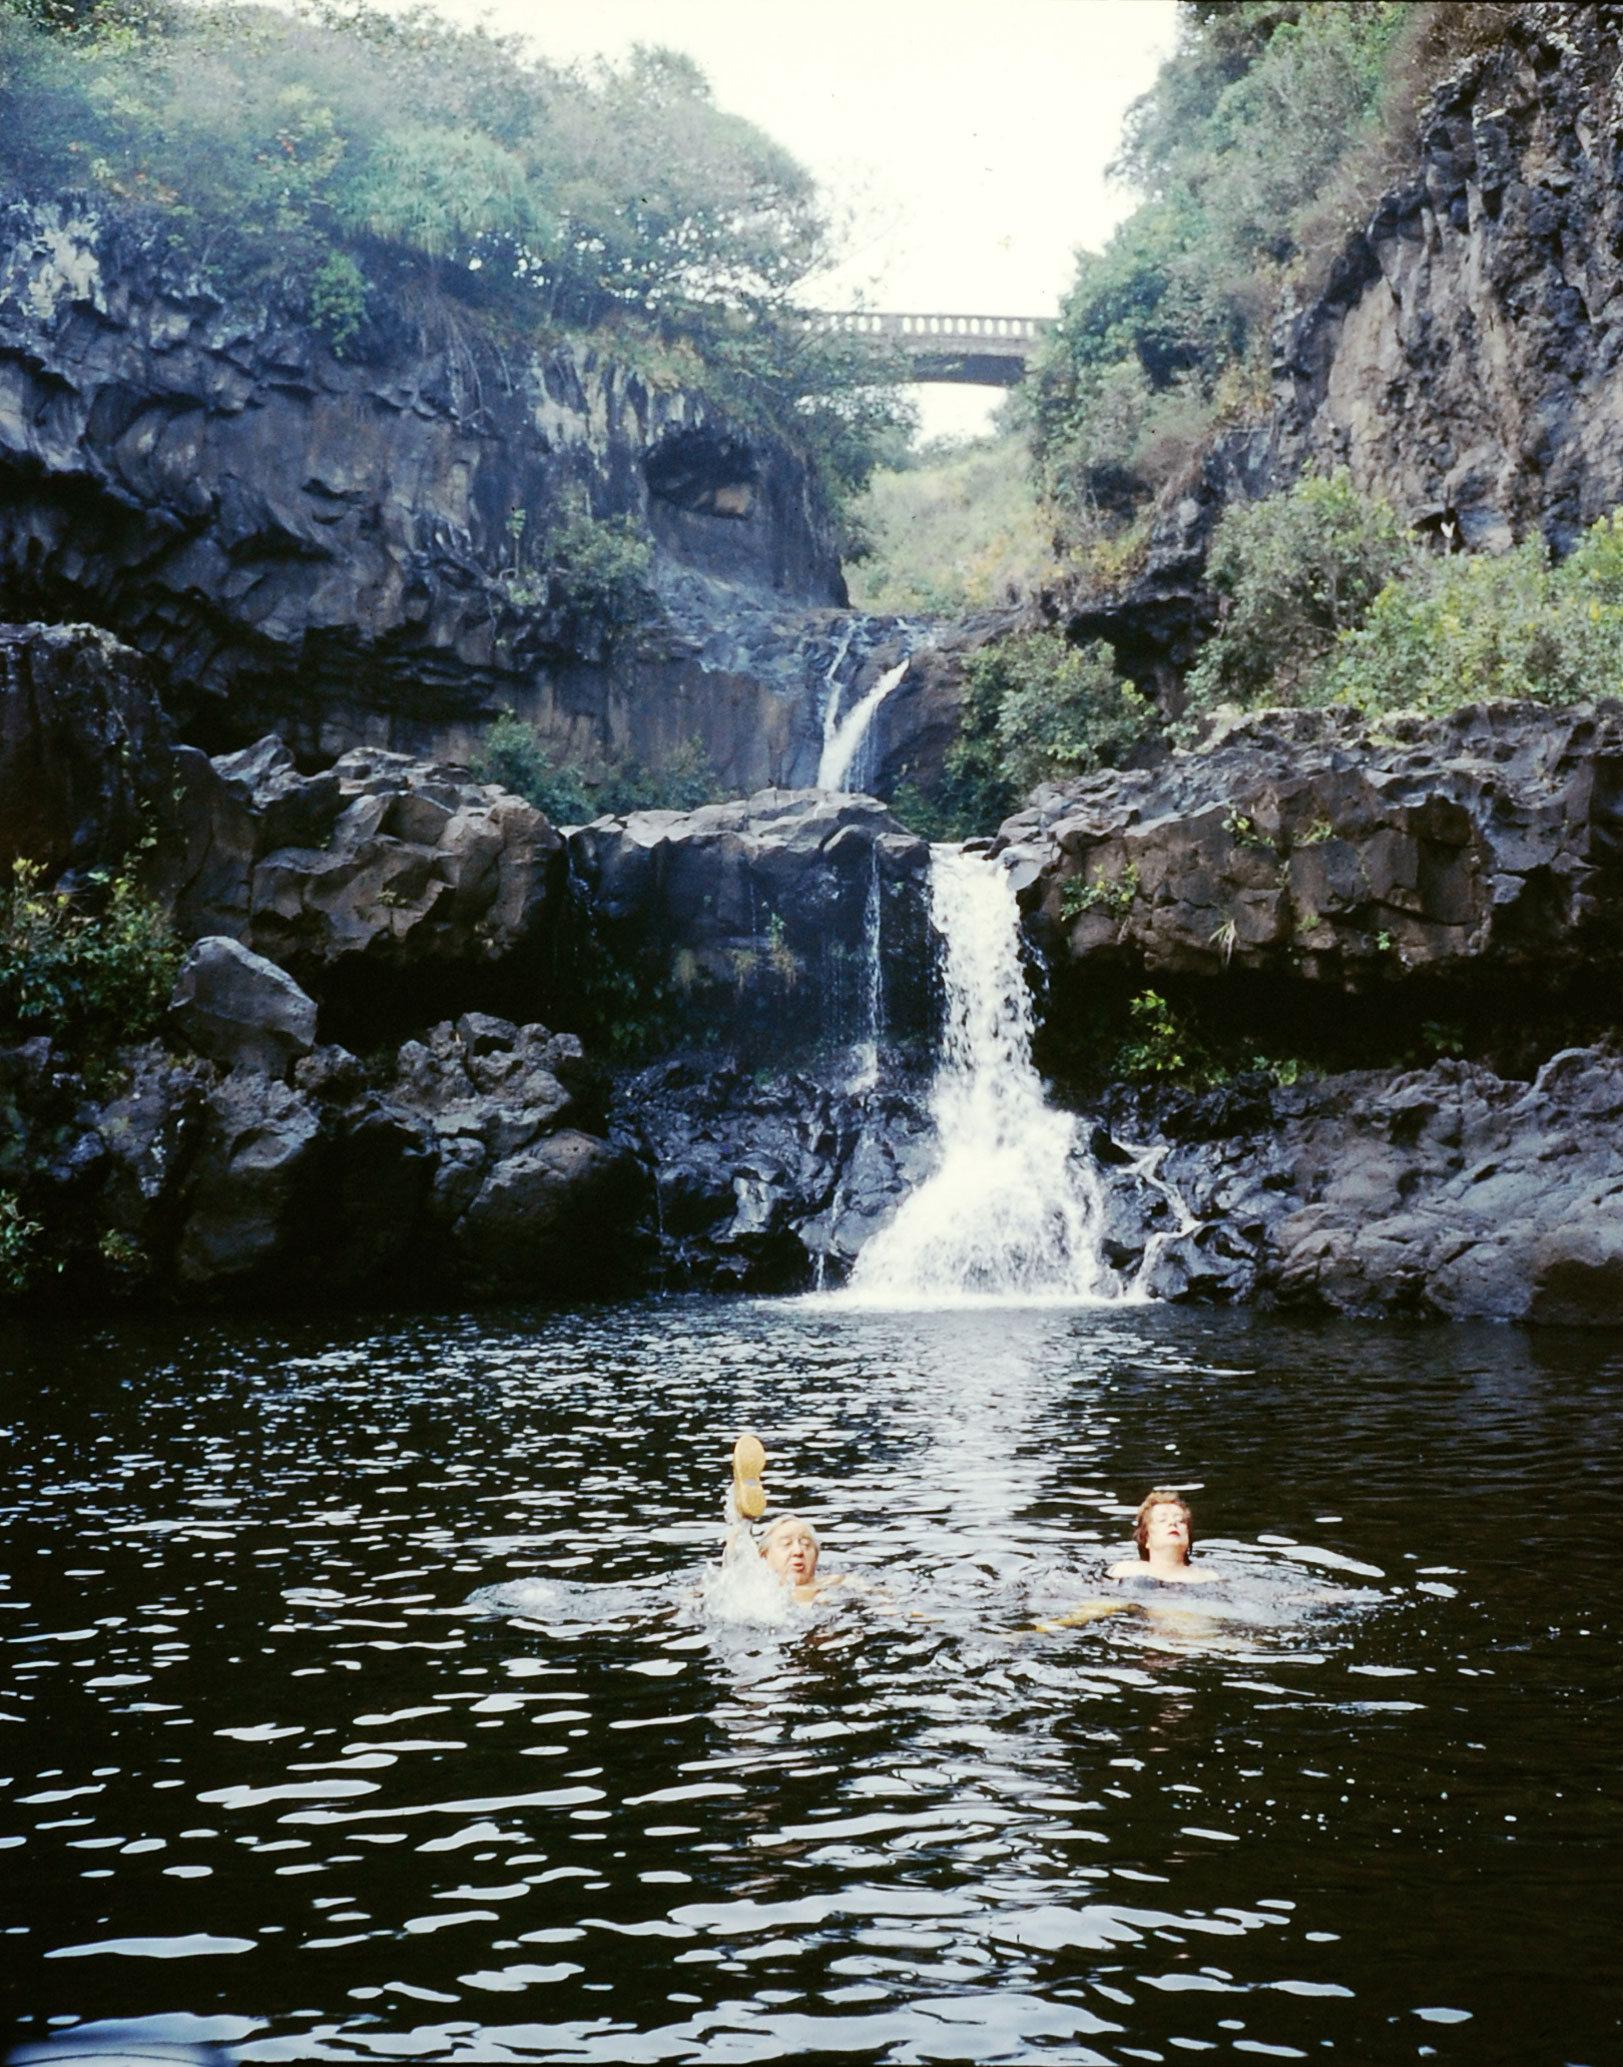 Swimming in a freshwater pool, Hawaii, 1959.